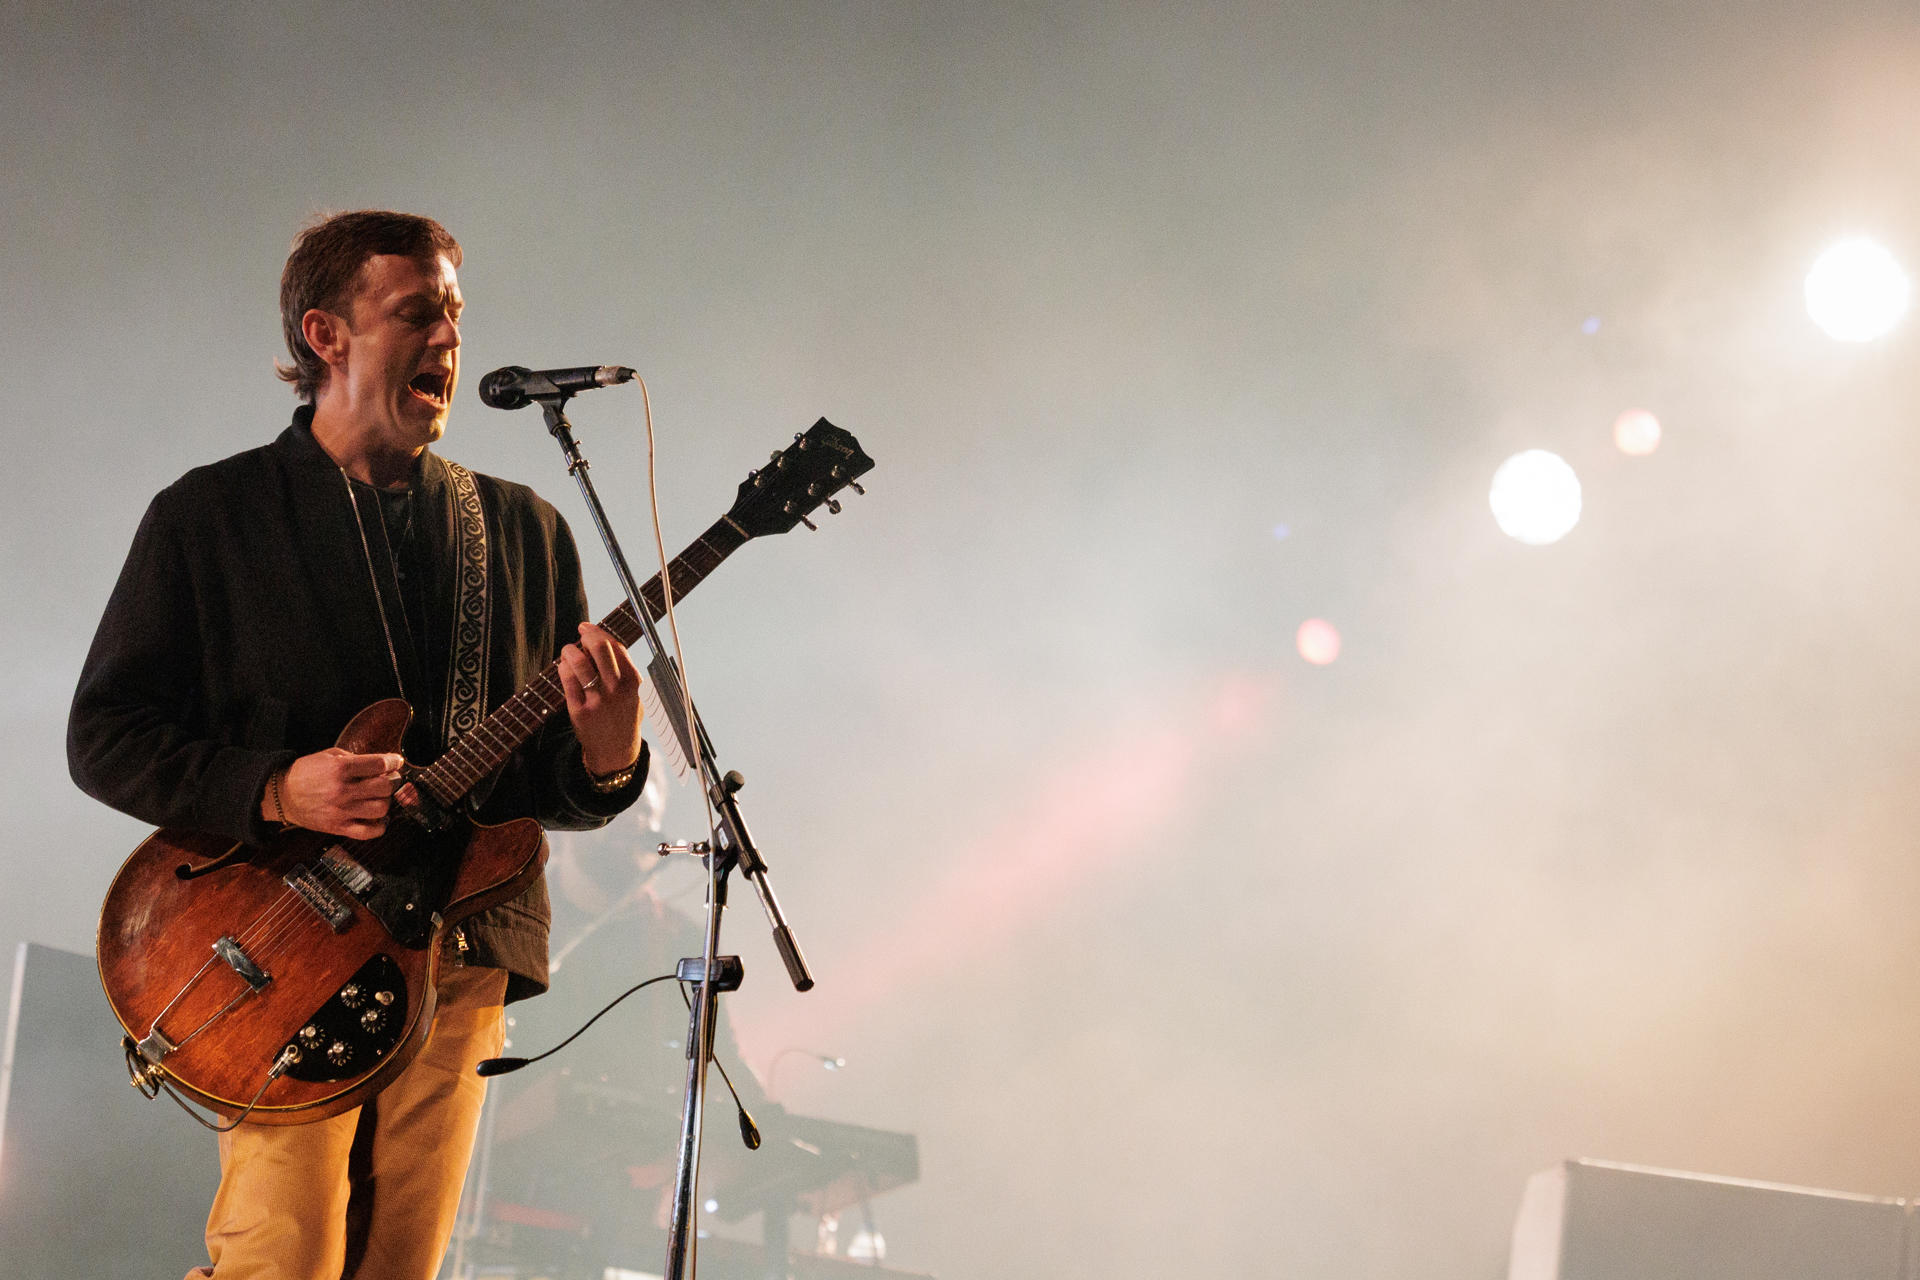 La banda estadounidense Kings of Leon, se presenta en el Festival Lollapalooza este sábado, en el Autódromo de Interlagos, en São Paulo (Brasil). EFE/Isaac Fontana